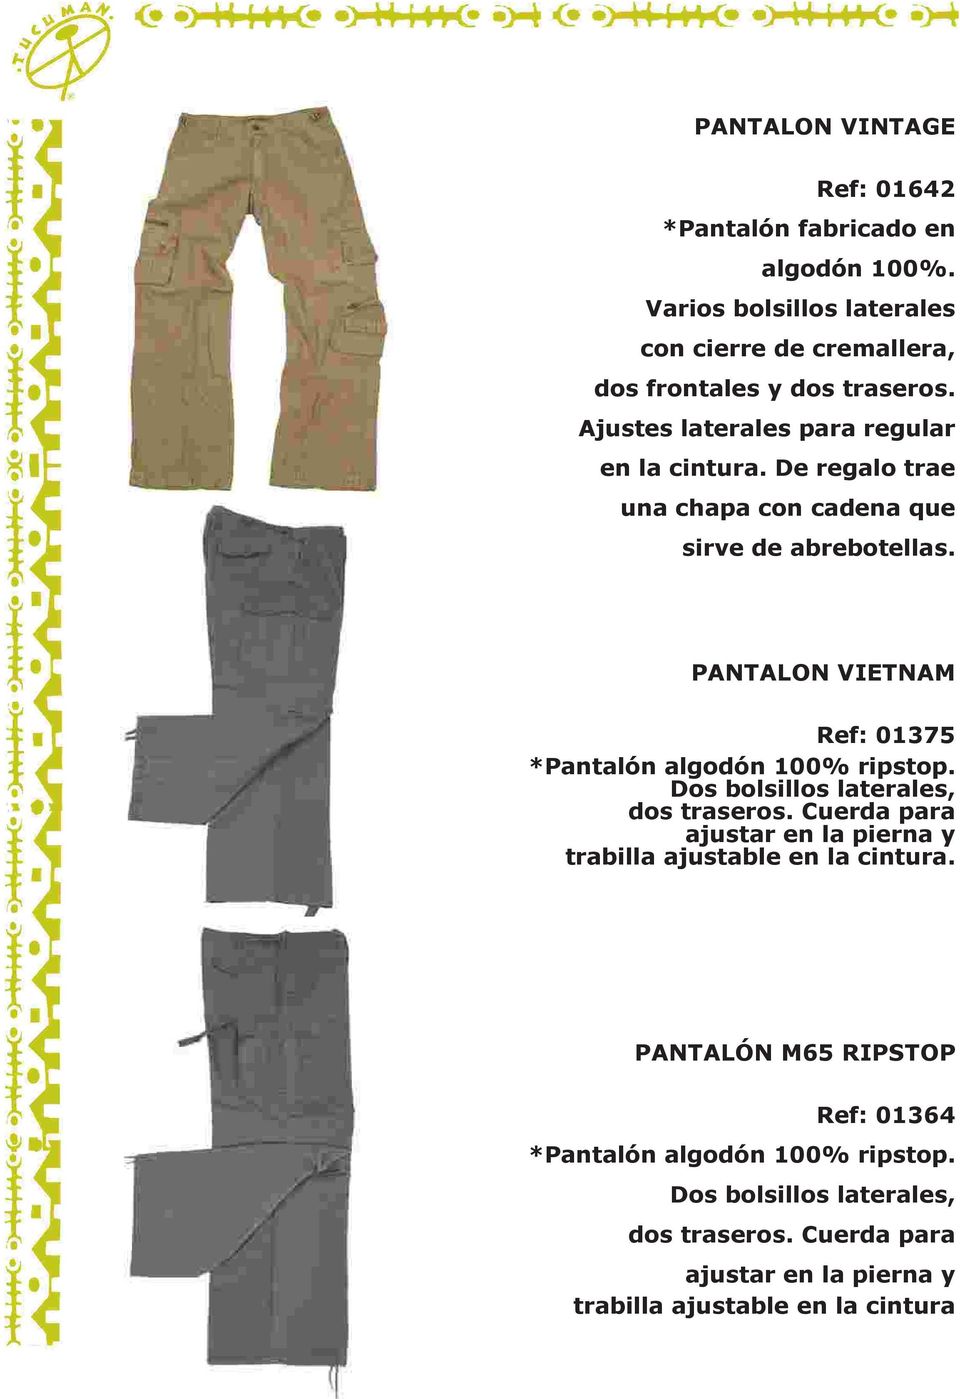 PANTALON VIETNAM Ref: 01375 *Pantalón algodón 100% ripstop. dos traseros.